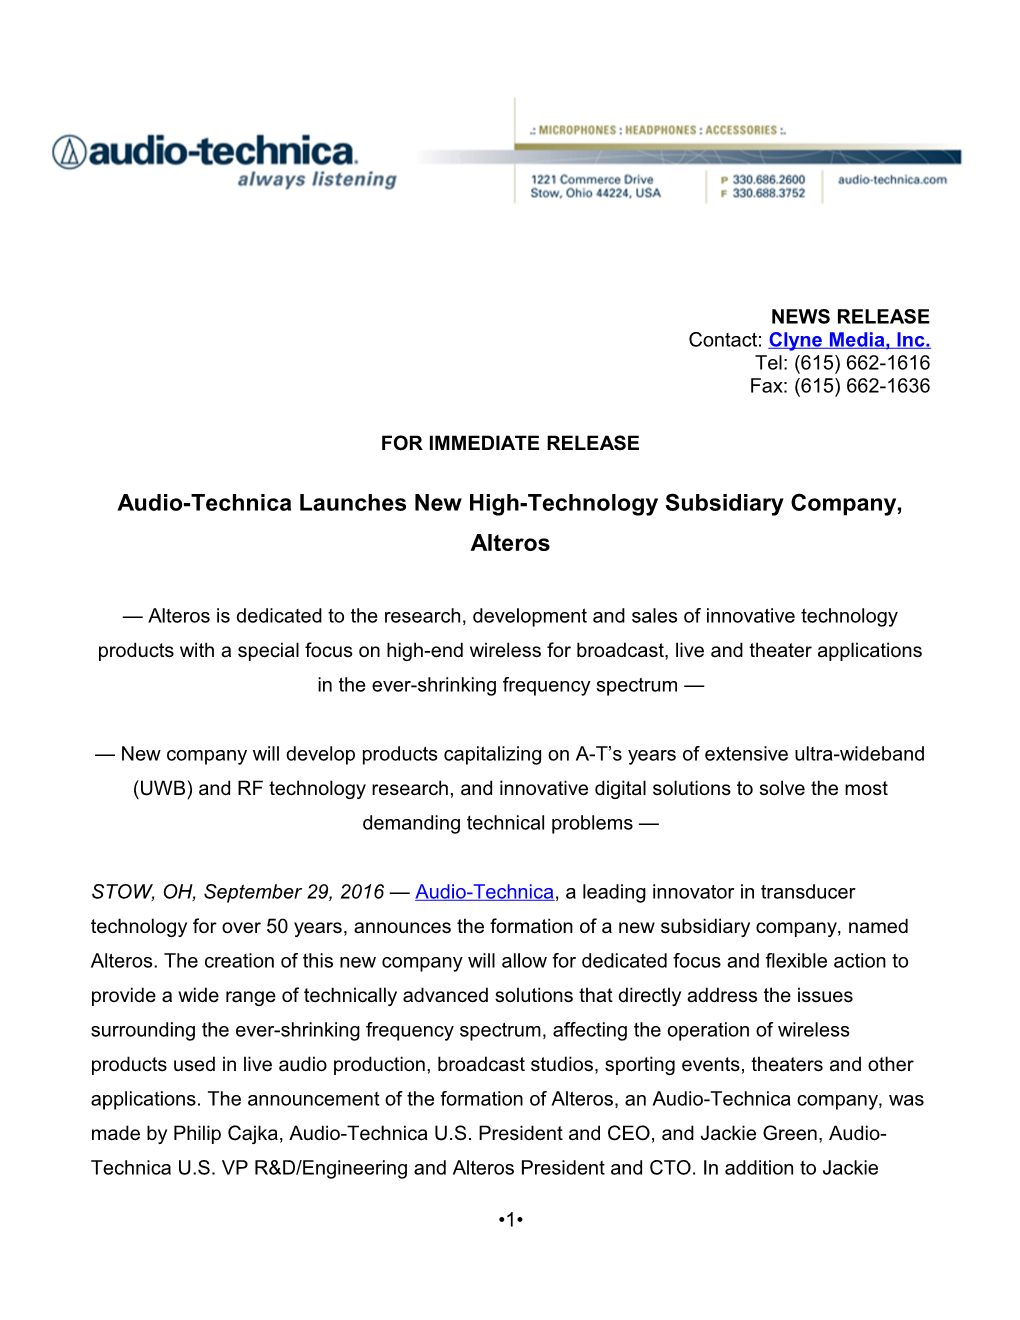 Audio-Technica Launchesnew High-Technology Subsidiary Company, Alteros